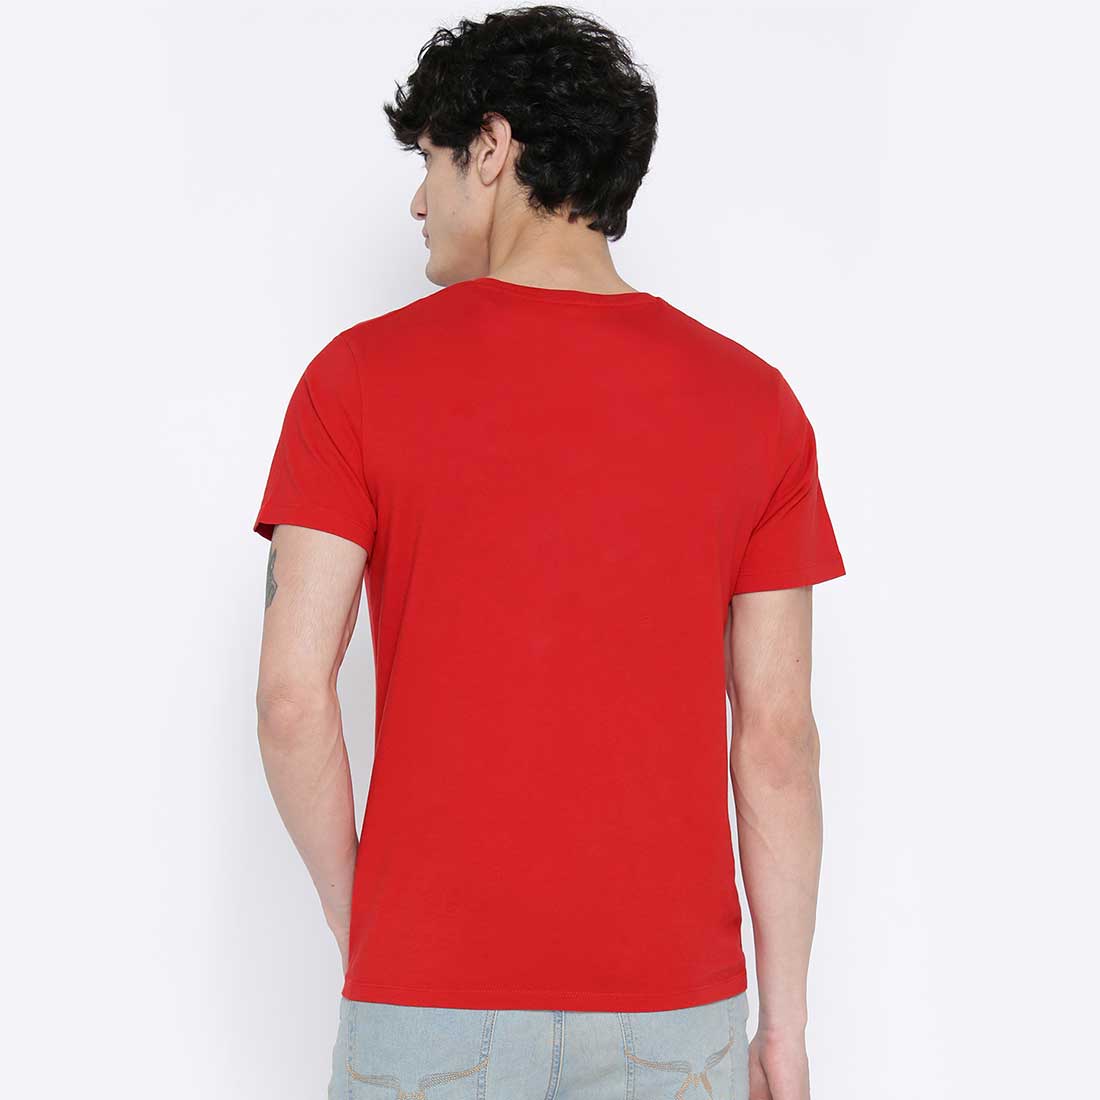 The Spoiled Brat Red Men T-Shirt